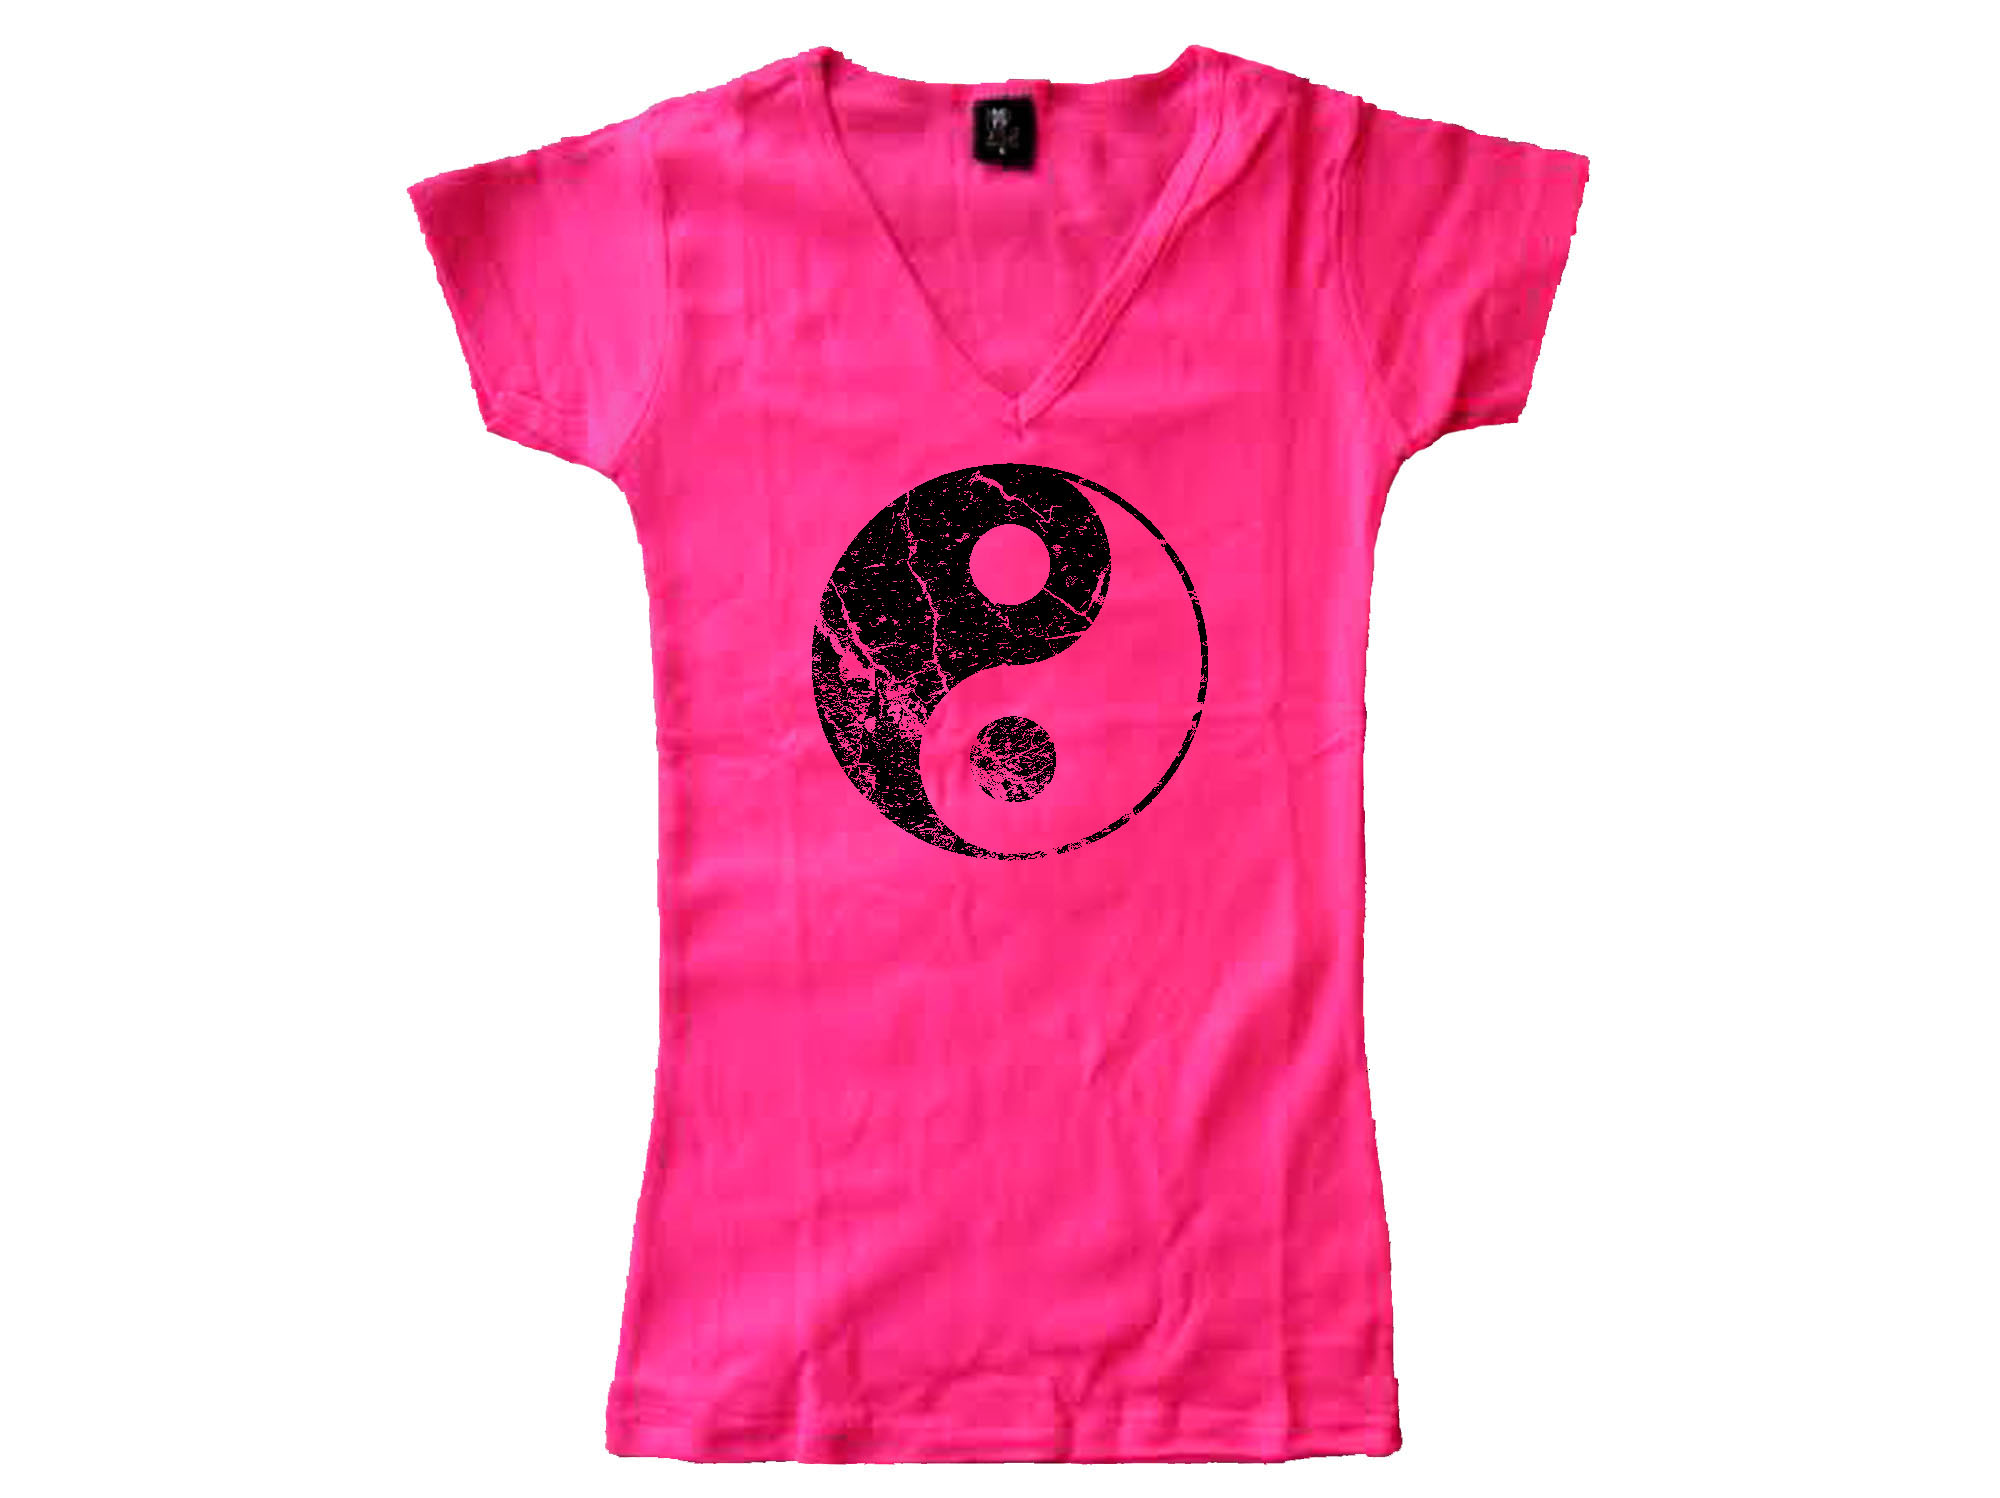 Yin yang distressed print pink tee shirt